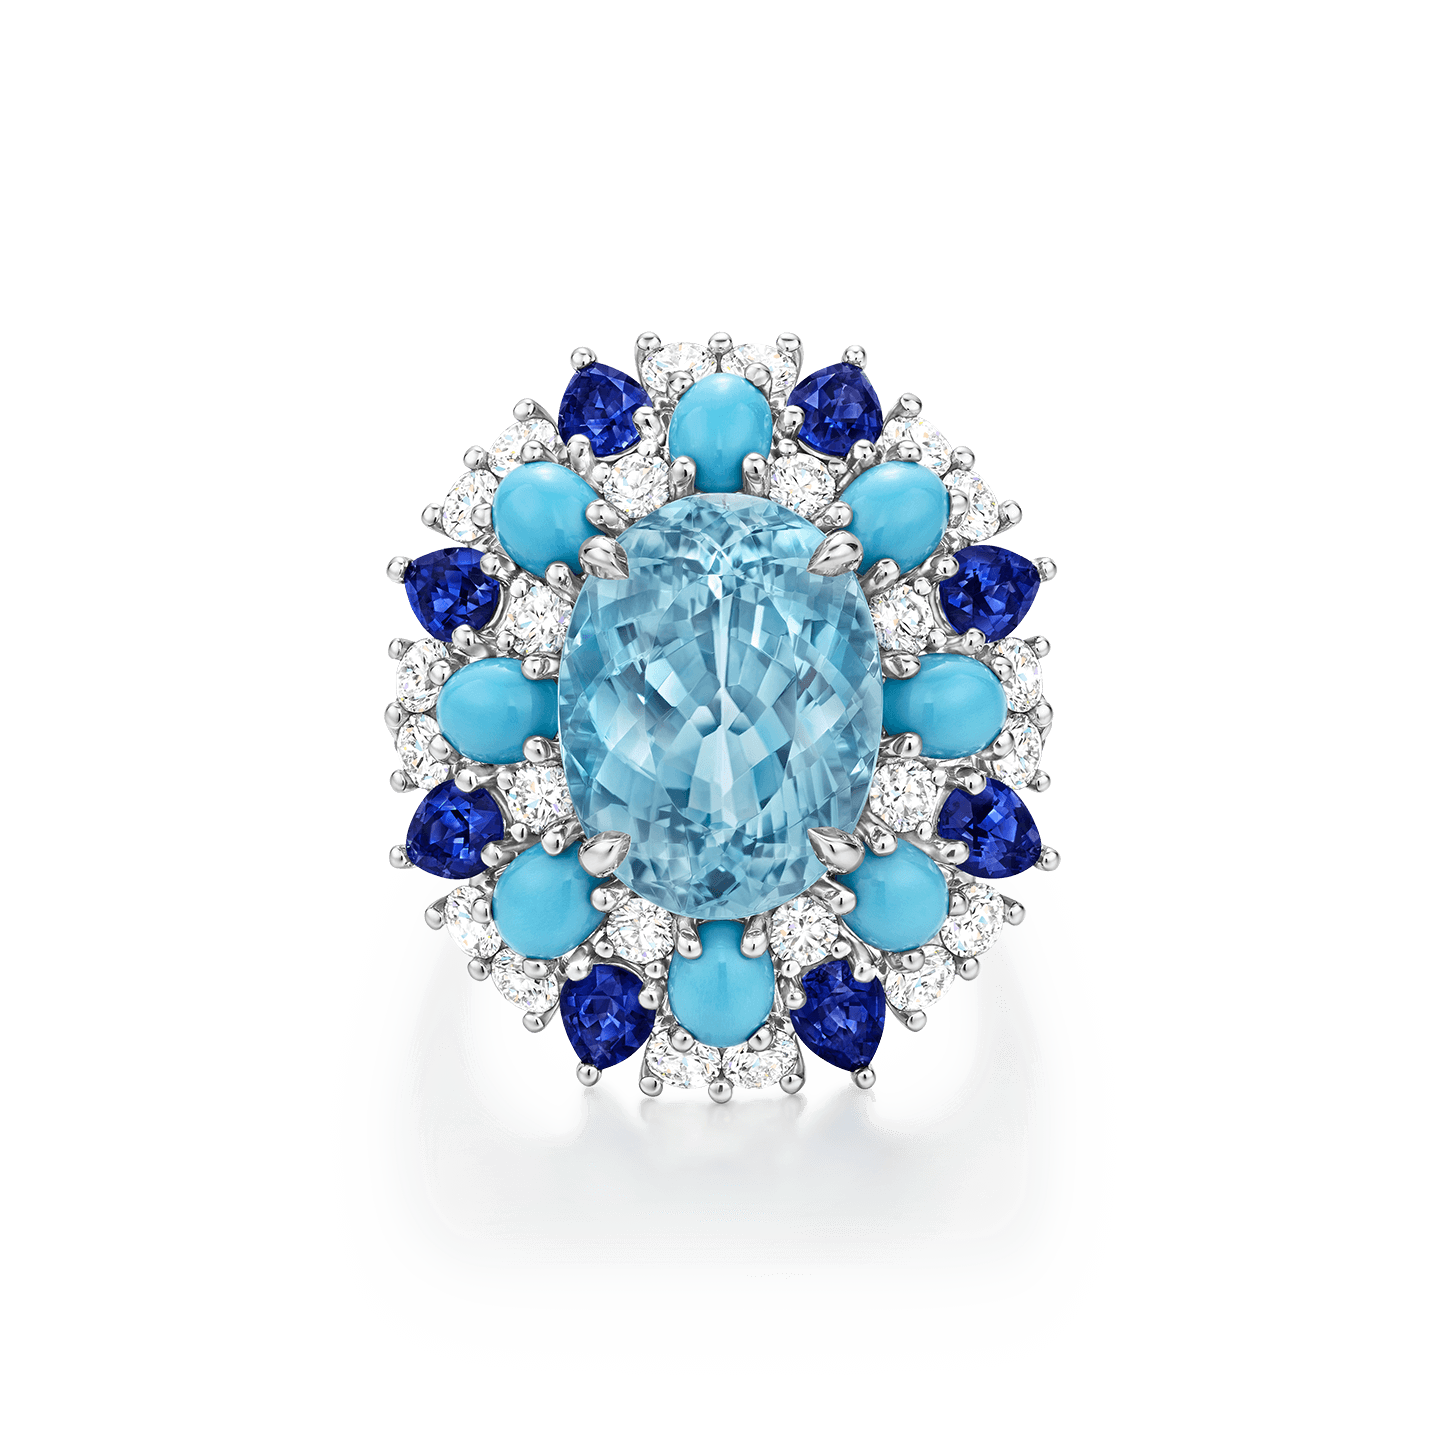 Winston Candy帕拉伊巴碧玺戒指，搭配蓝宝石、绿松石和钻石